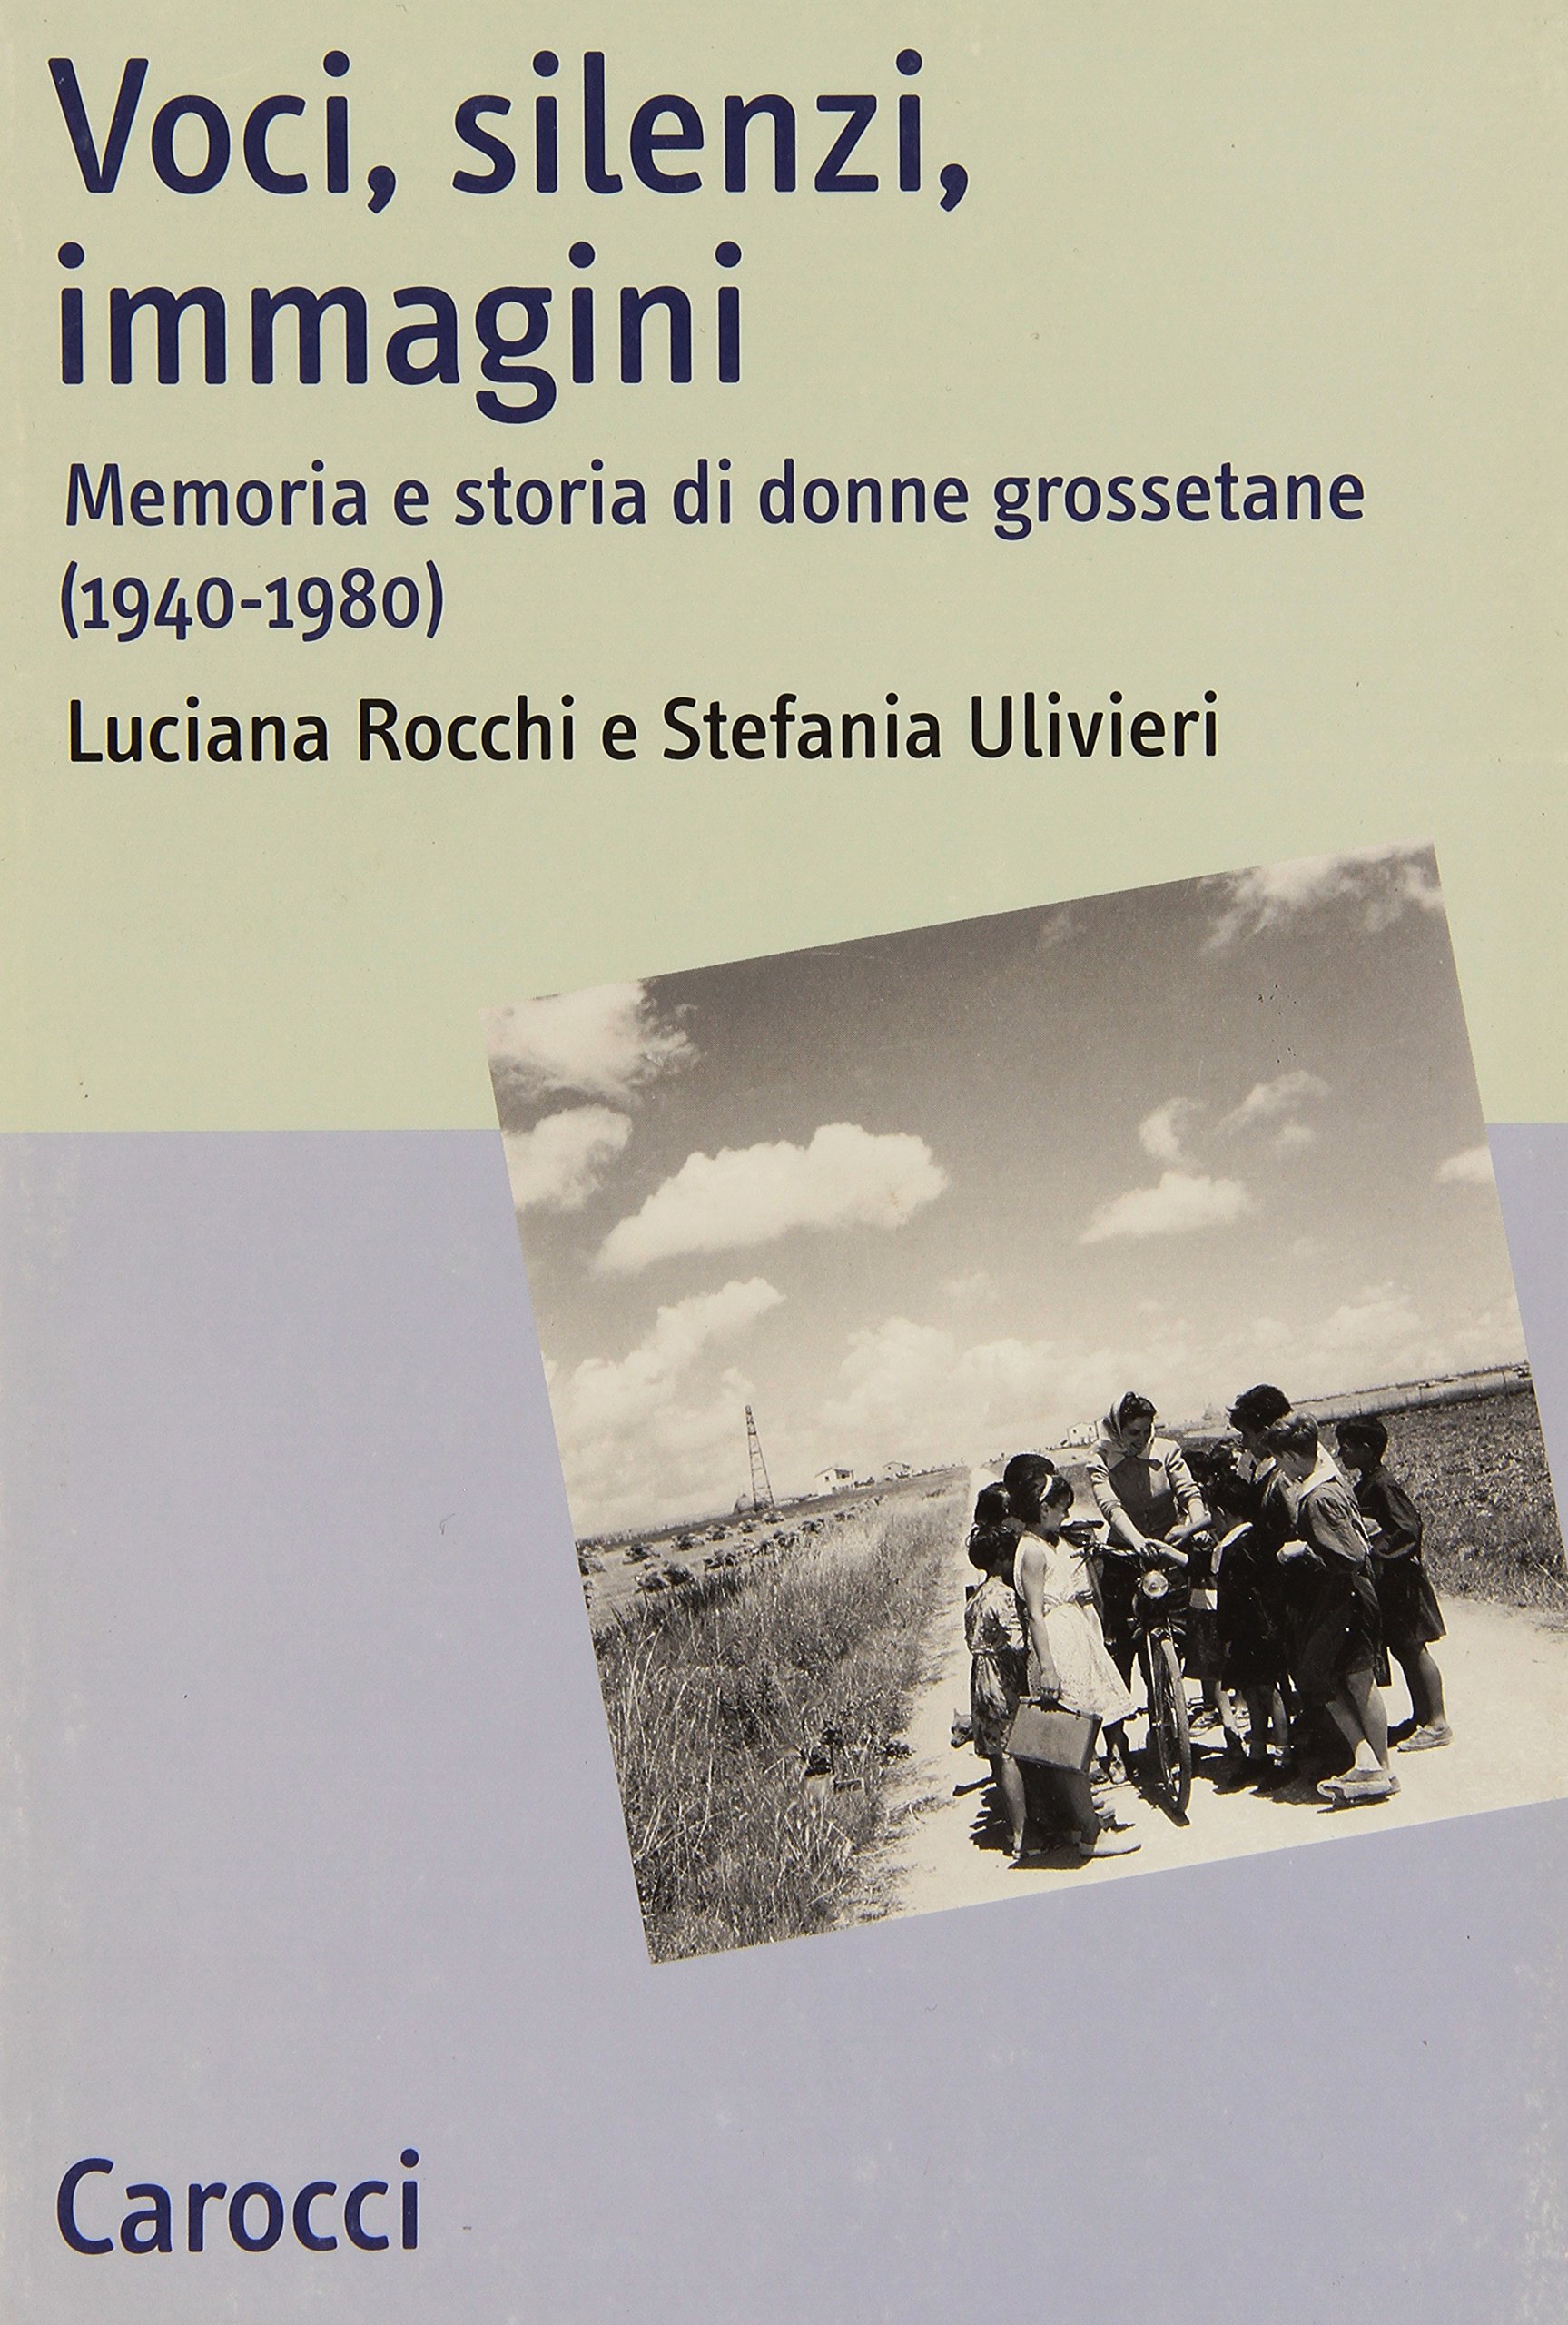 Voci, silenzi, immagini. memoria e storia di donne grossetane, a cura di uciana Rocchi e Stefania Ulivieri, Carocci, Roma 2004